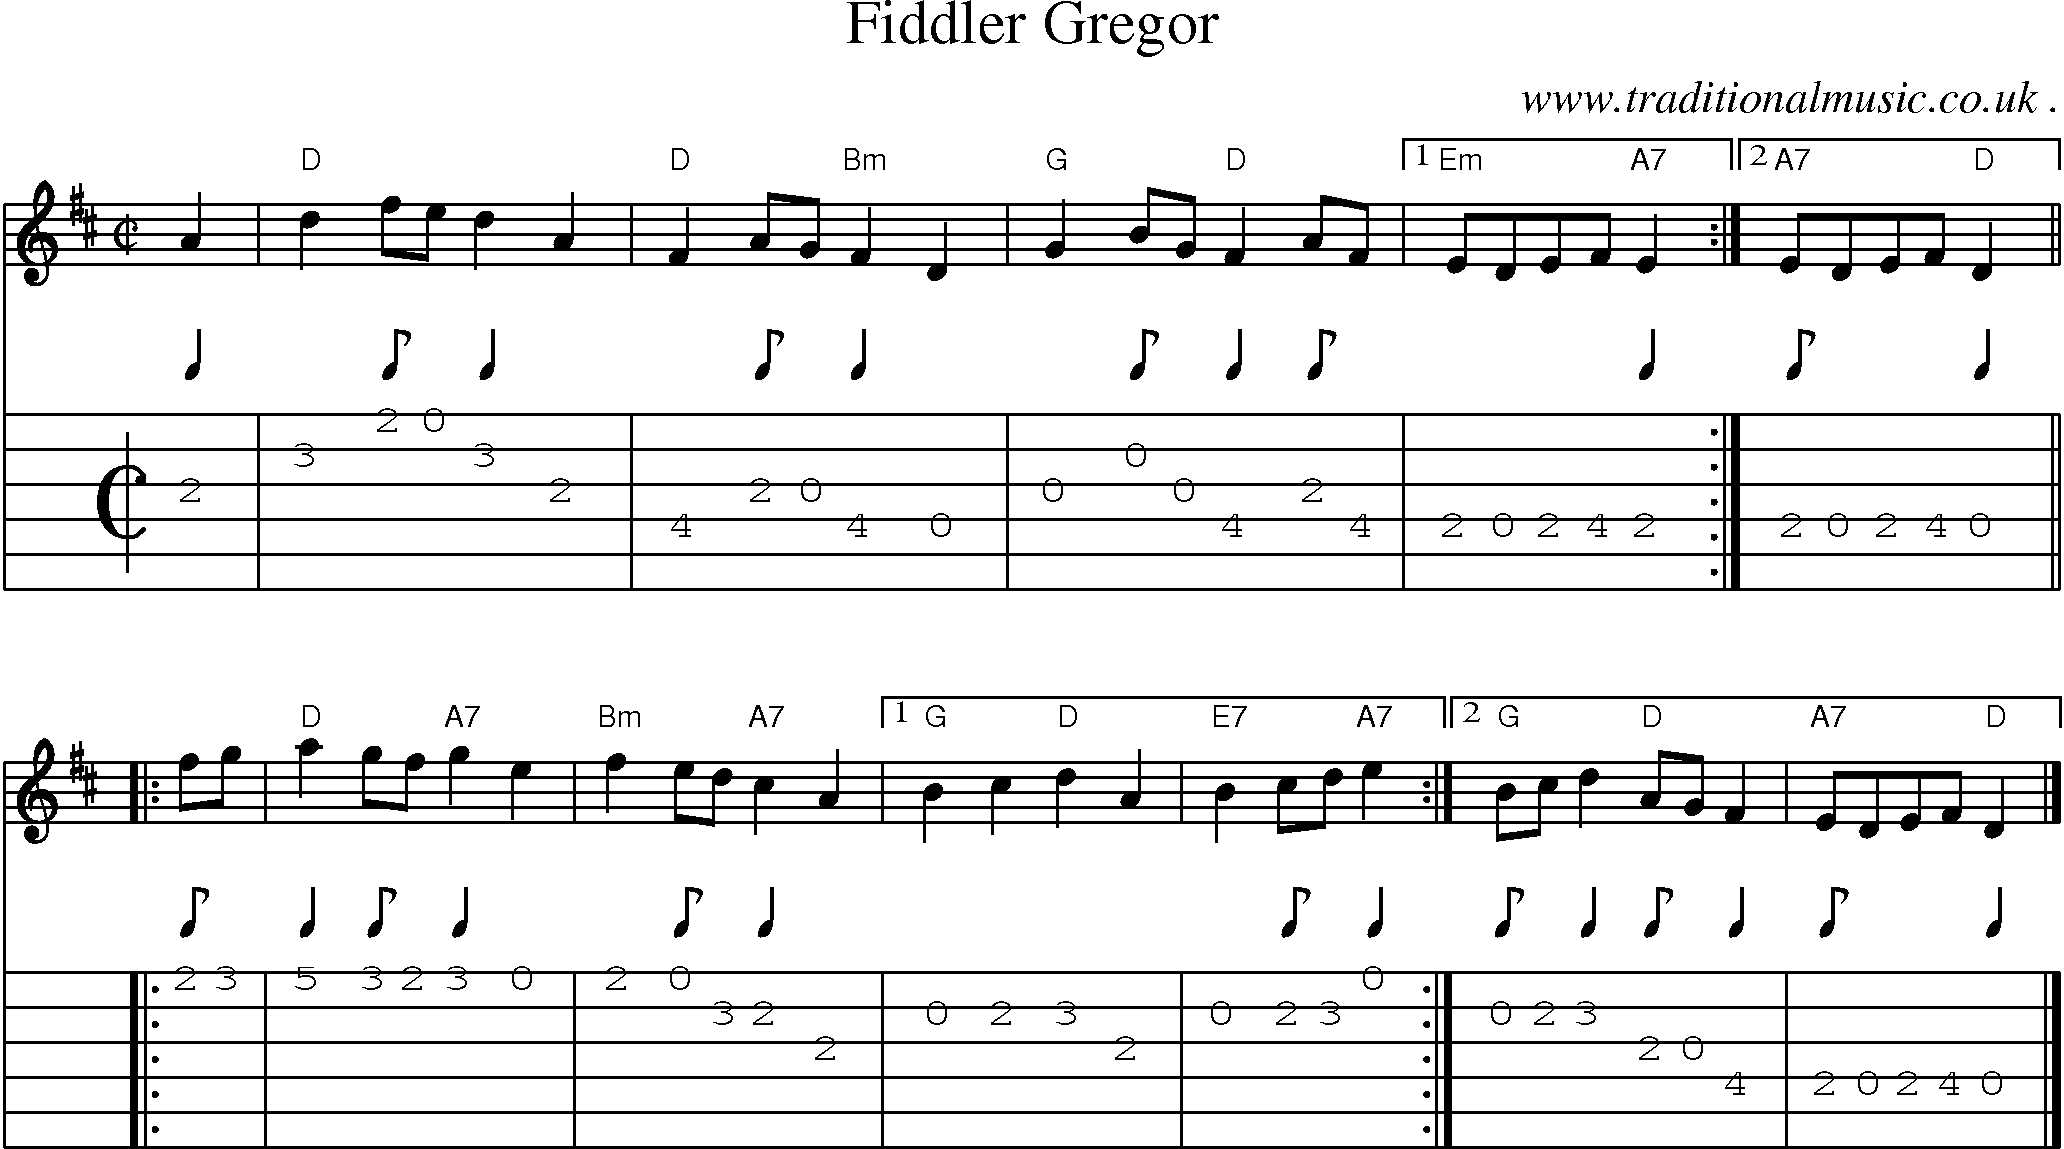 Sheet-music  score, Chords and Guitar Tabs for Fiddler Gregor